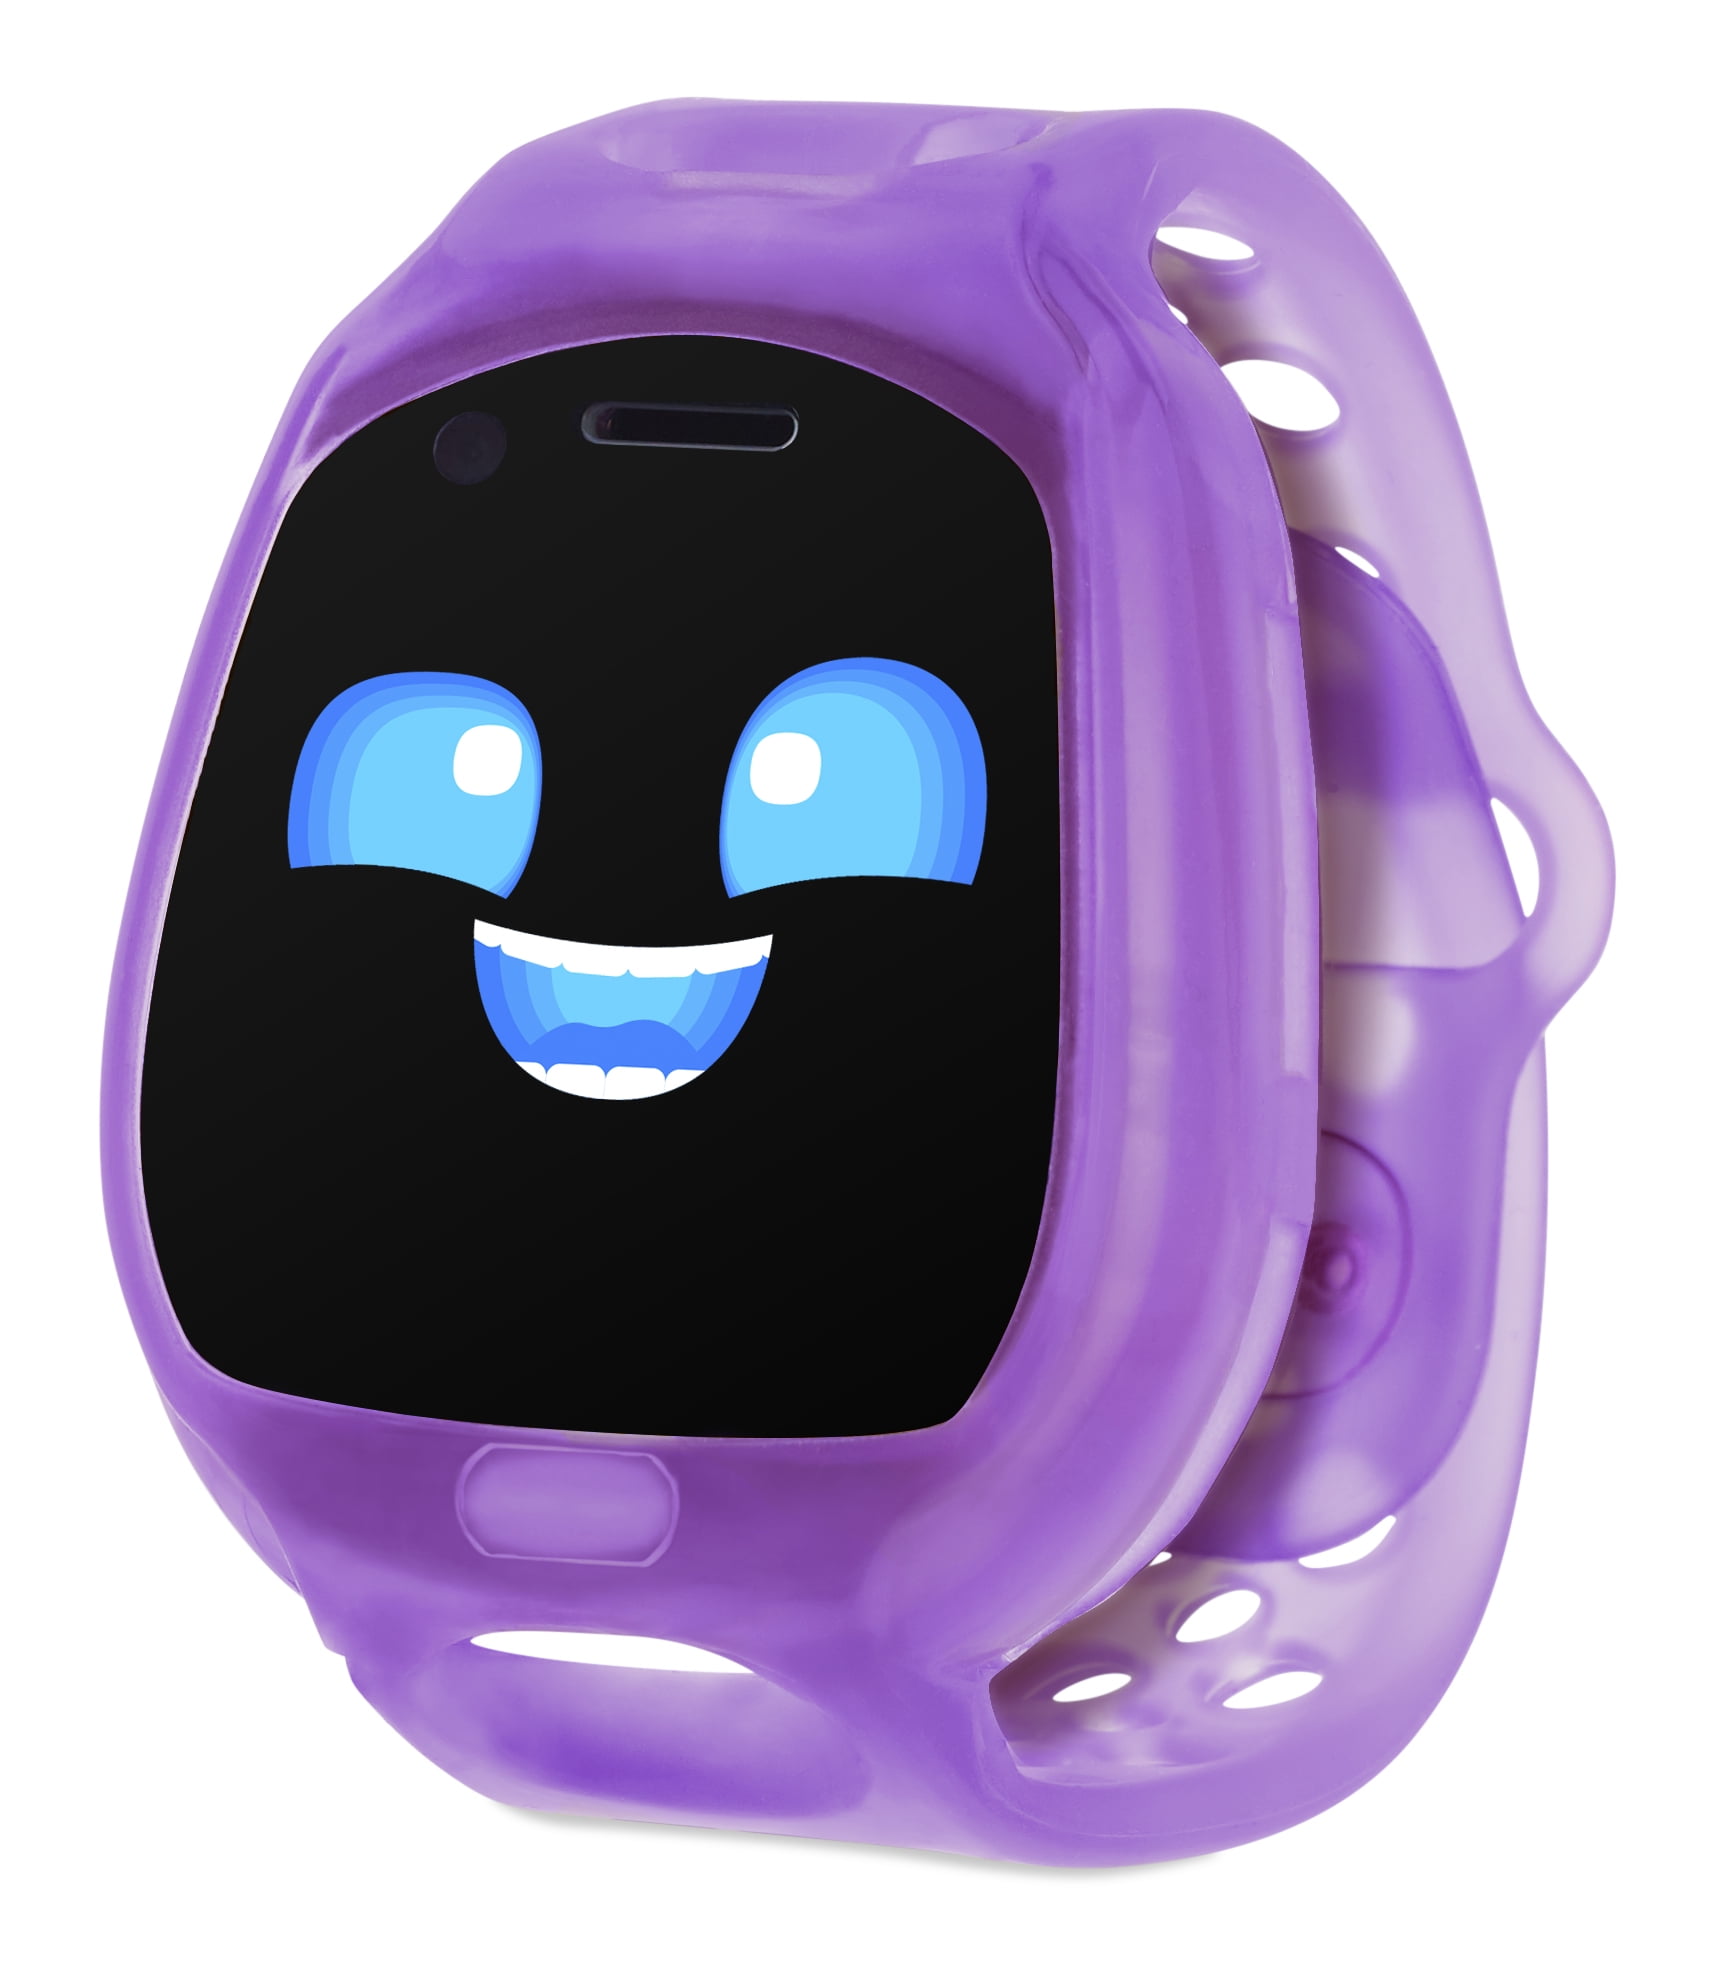 Little Tikes Tobi 2 Robot Purple Smartwatch- 2 Cameras w Interactive Robot Games, Videos, Selfies, Pedometer, Touch Screen, Parental Control- Gifts, Smart Watch for Kids Boys Girls 6+